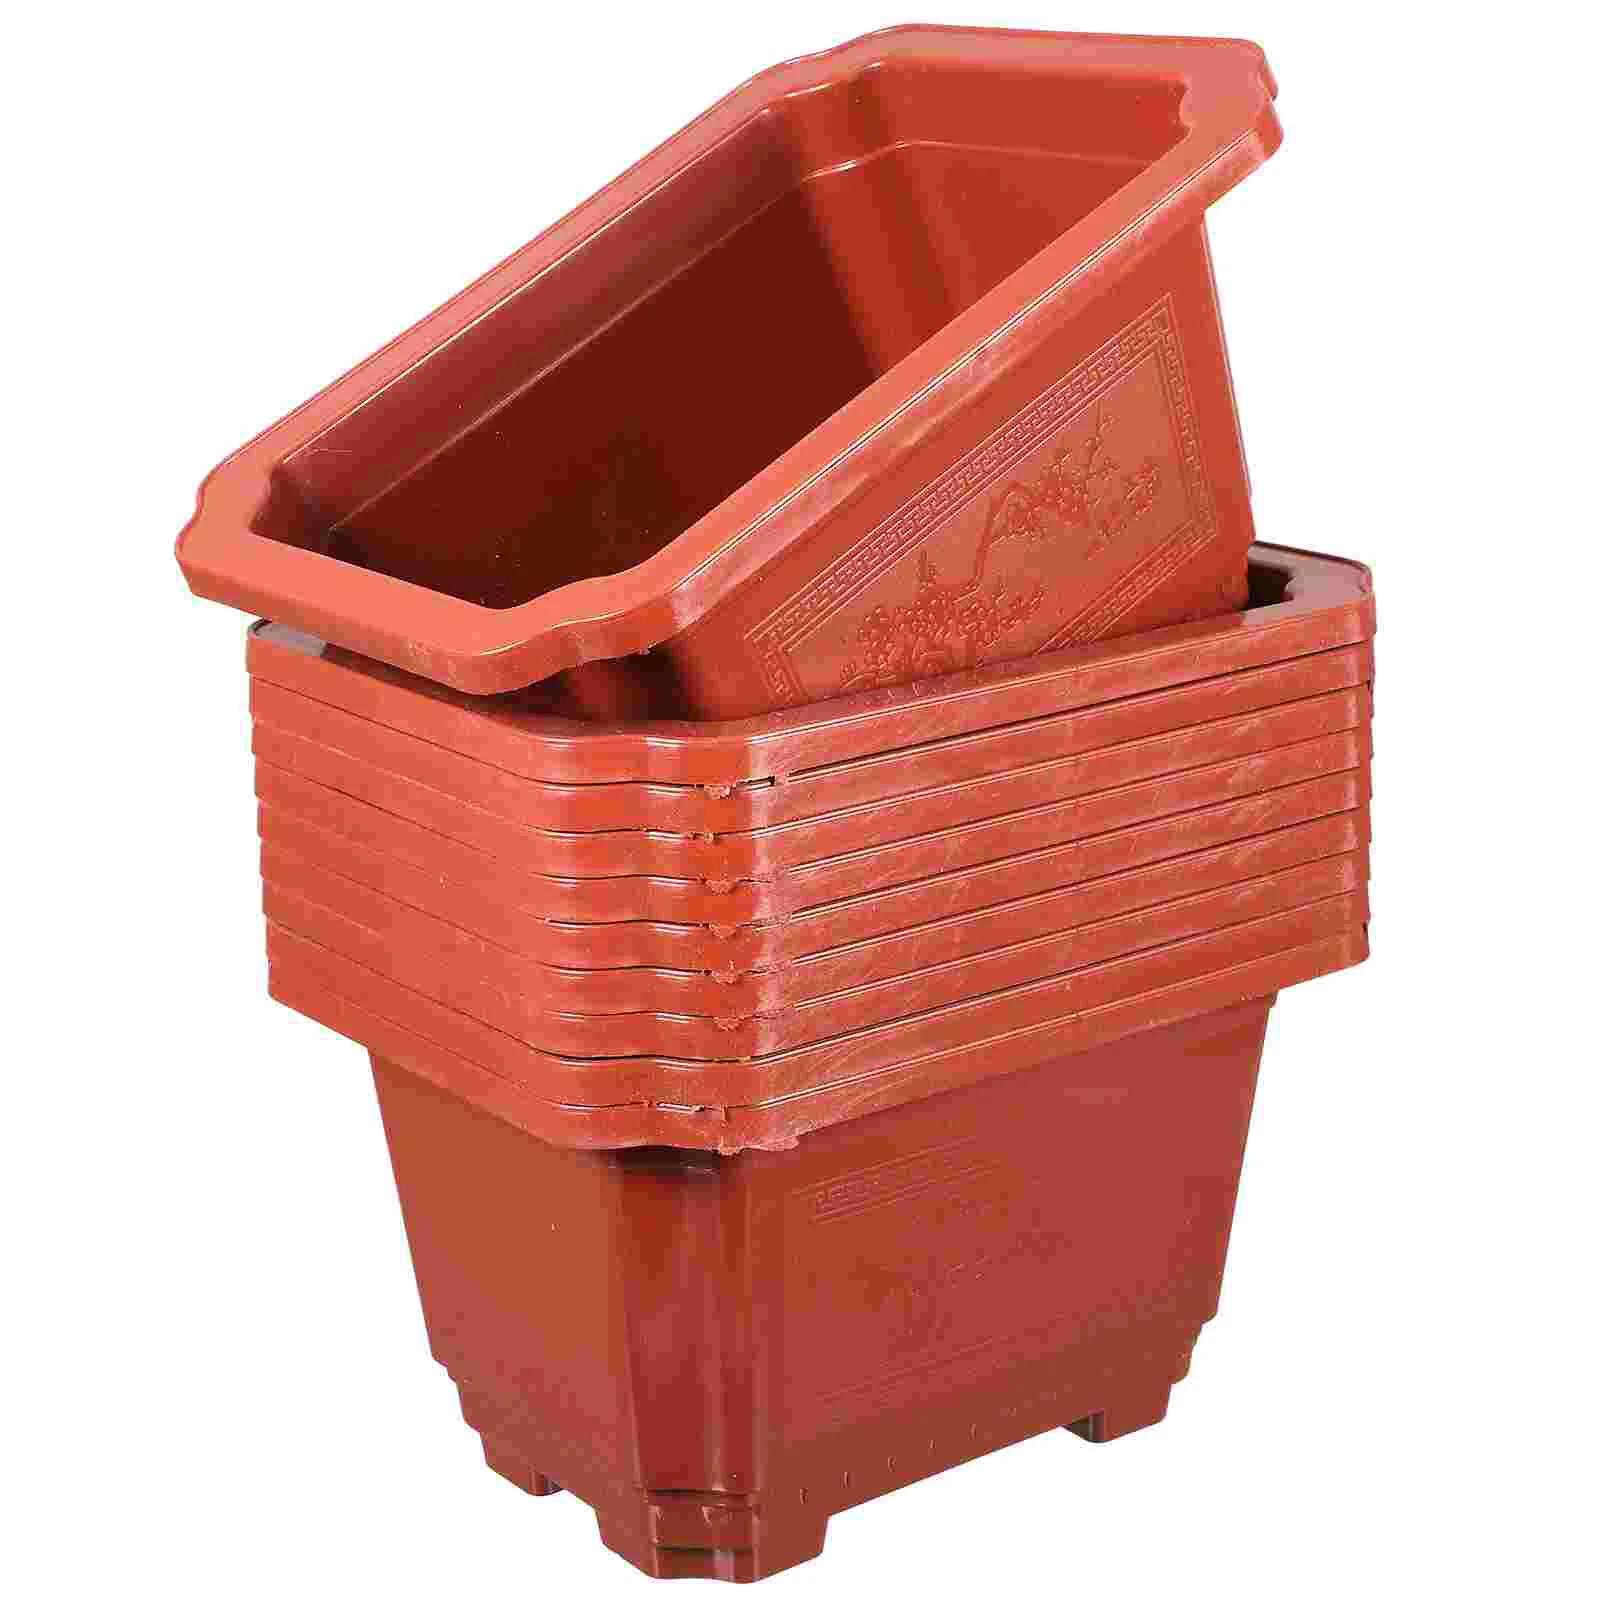 

10 Pcs Flowerpot Household Gardening Bonsai Container Planting Rectangular Accessory Plastic Holder Large